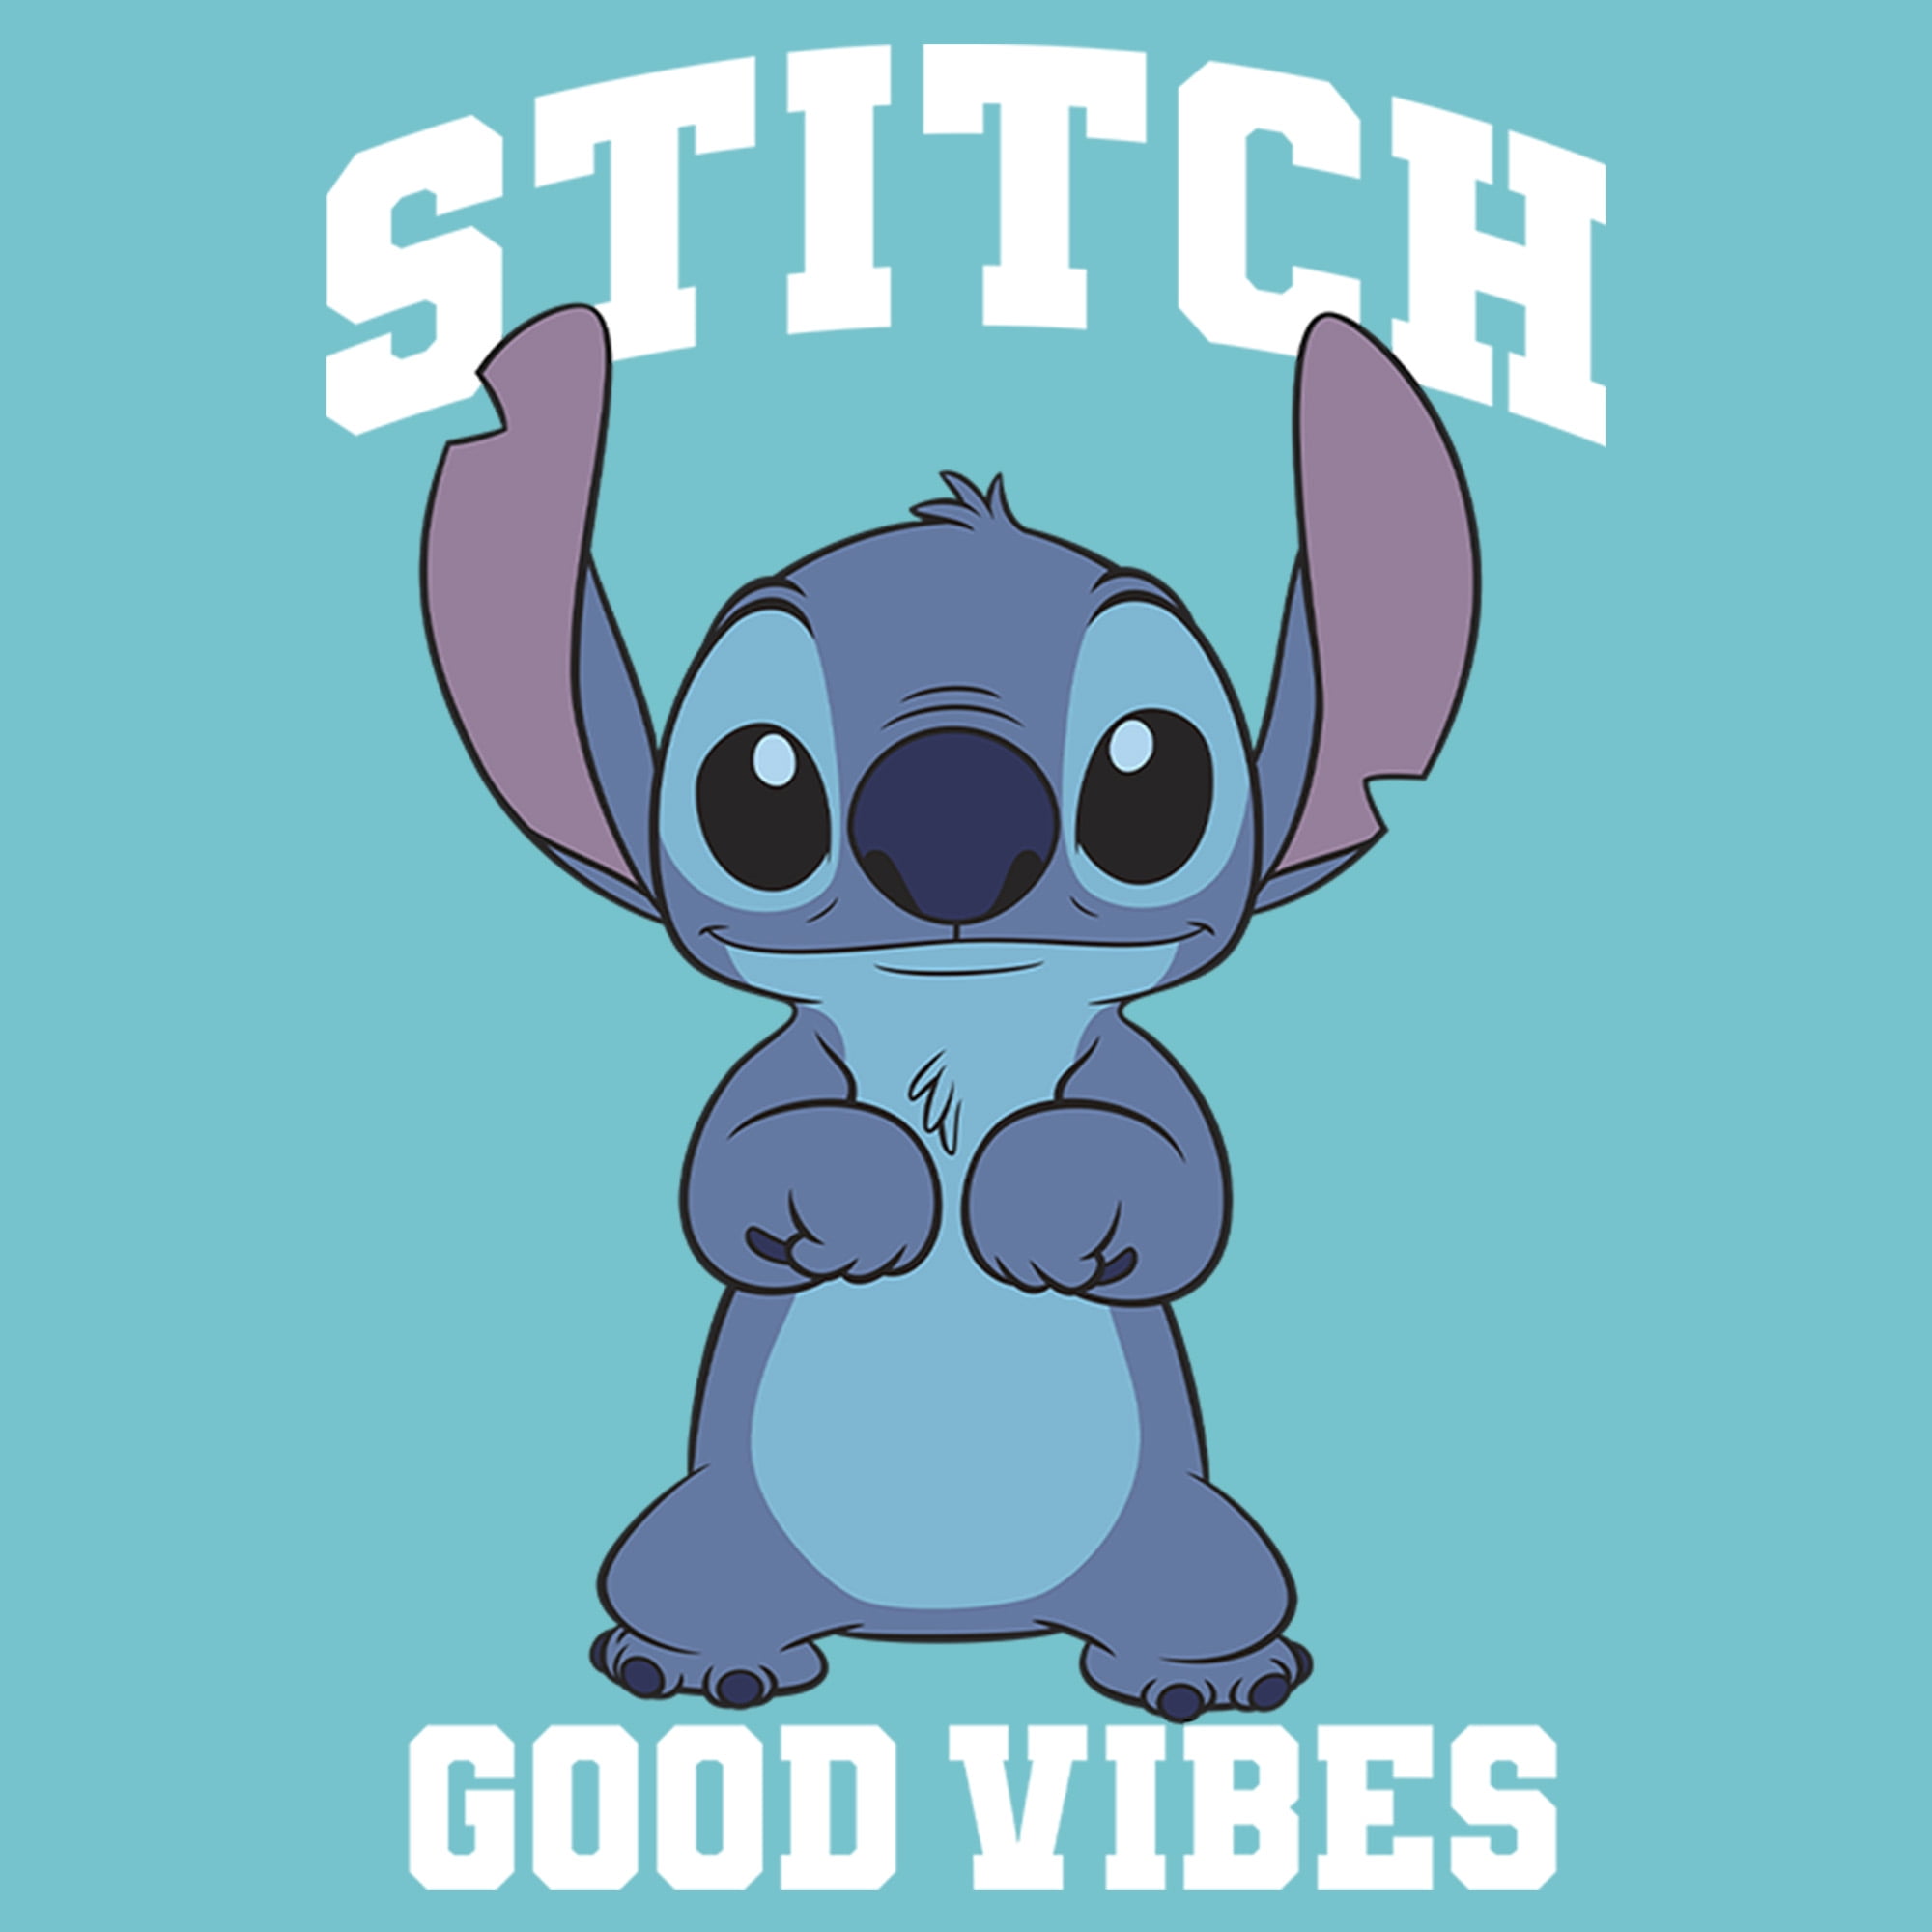 Louis Vuitton Lilo And Stitch Dabbing Stay Stylish t-shirt by To